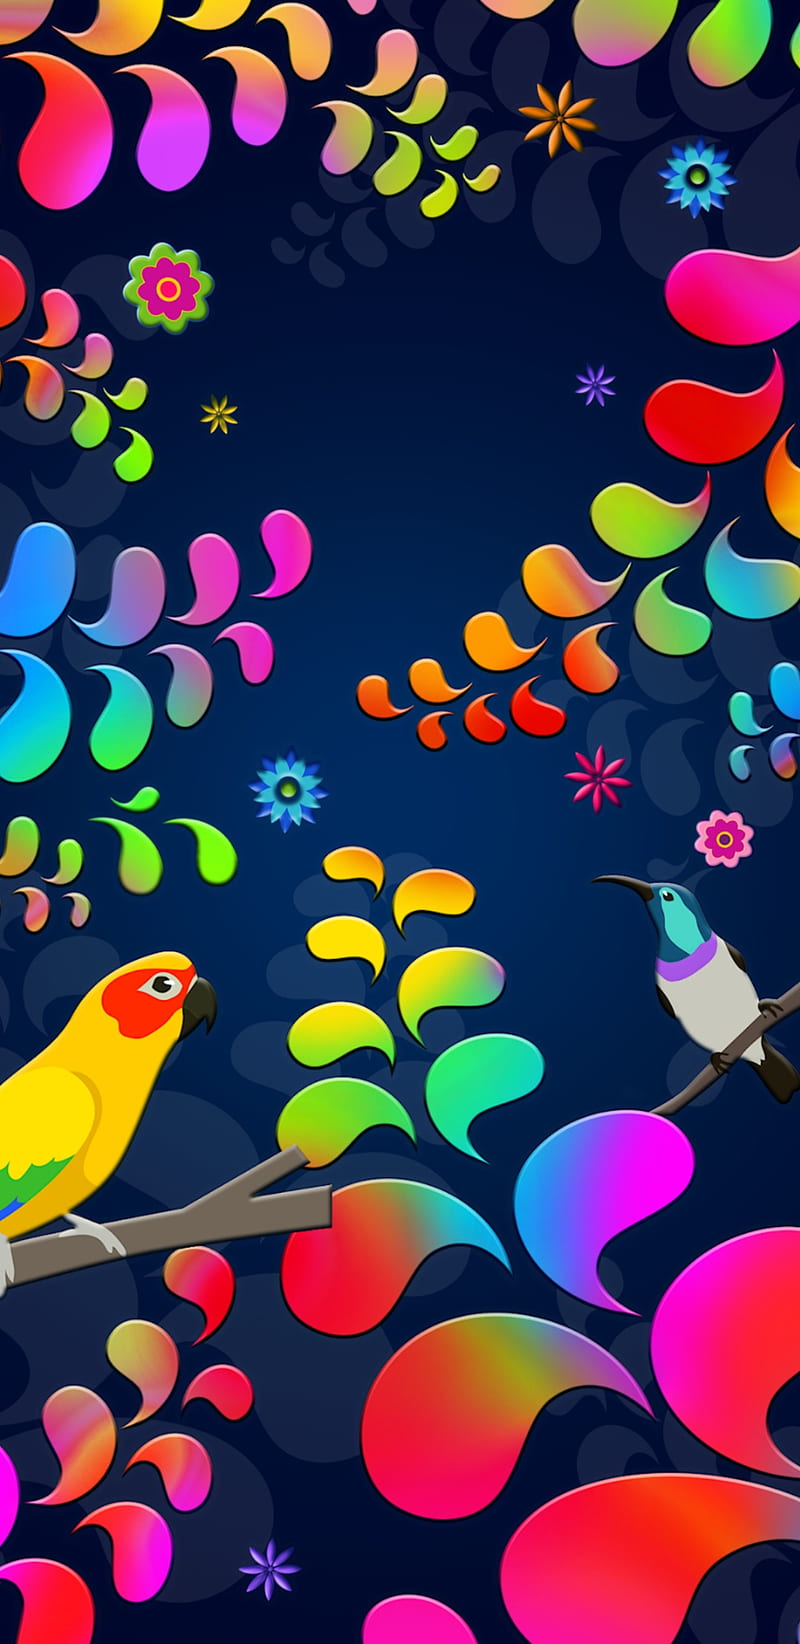 Birds in Sunset Wallpaper - iPhone, Android & Desktop Backgrounds